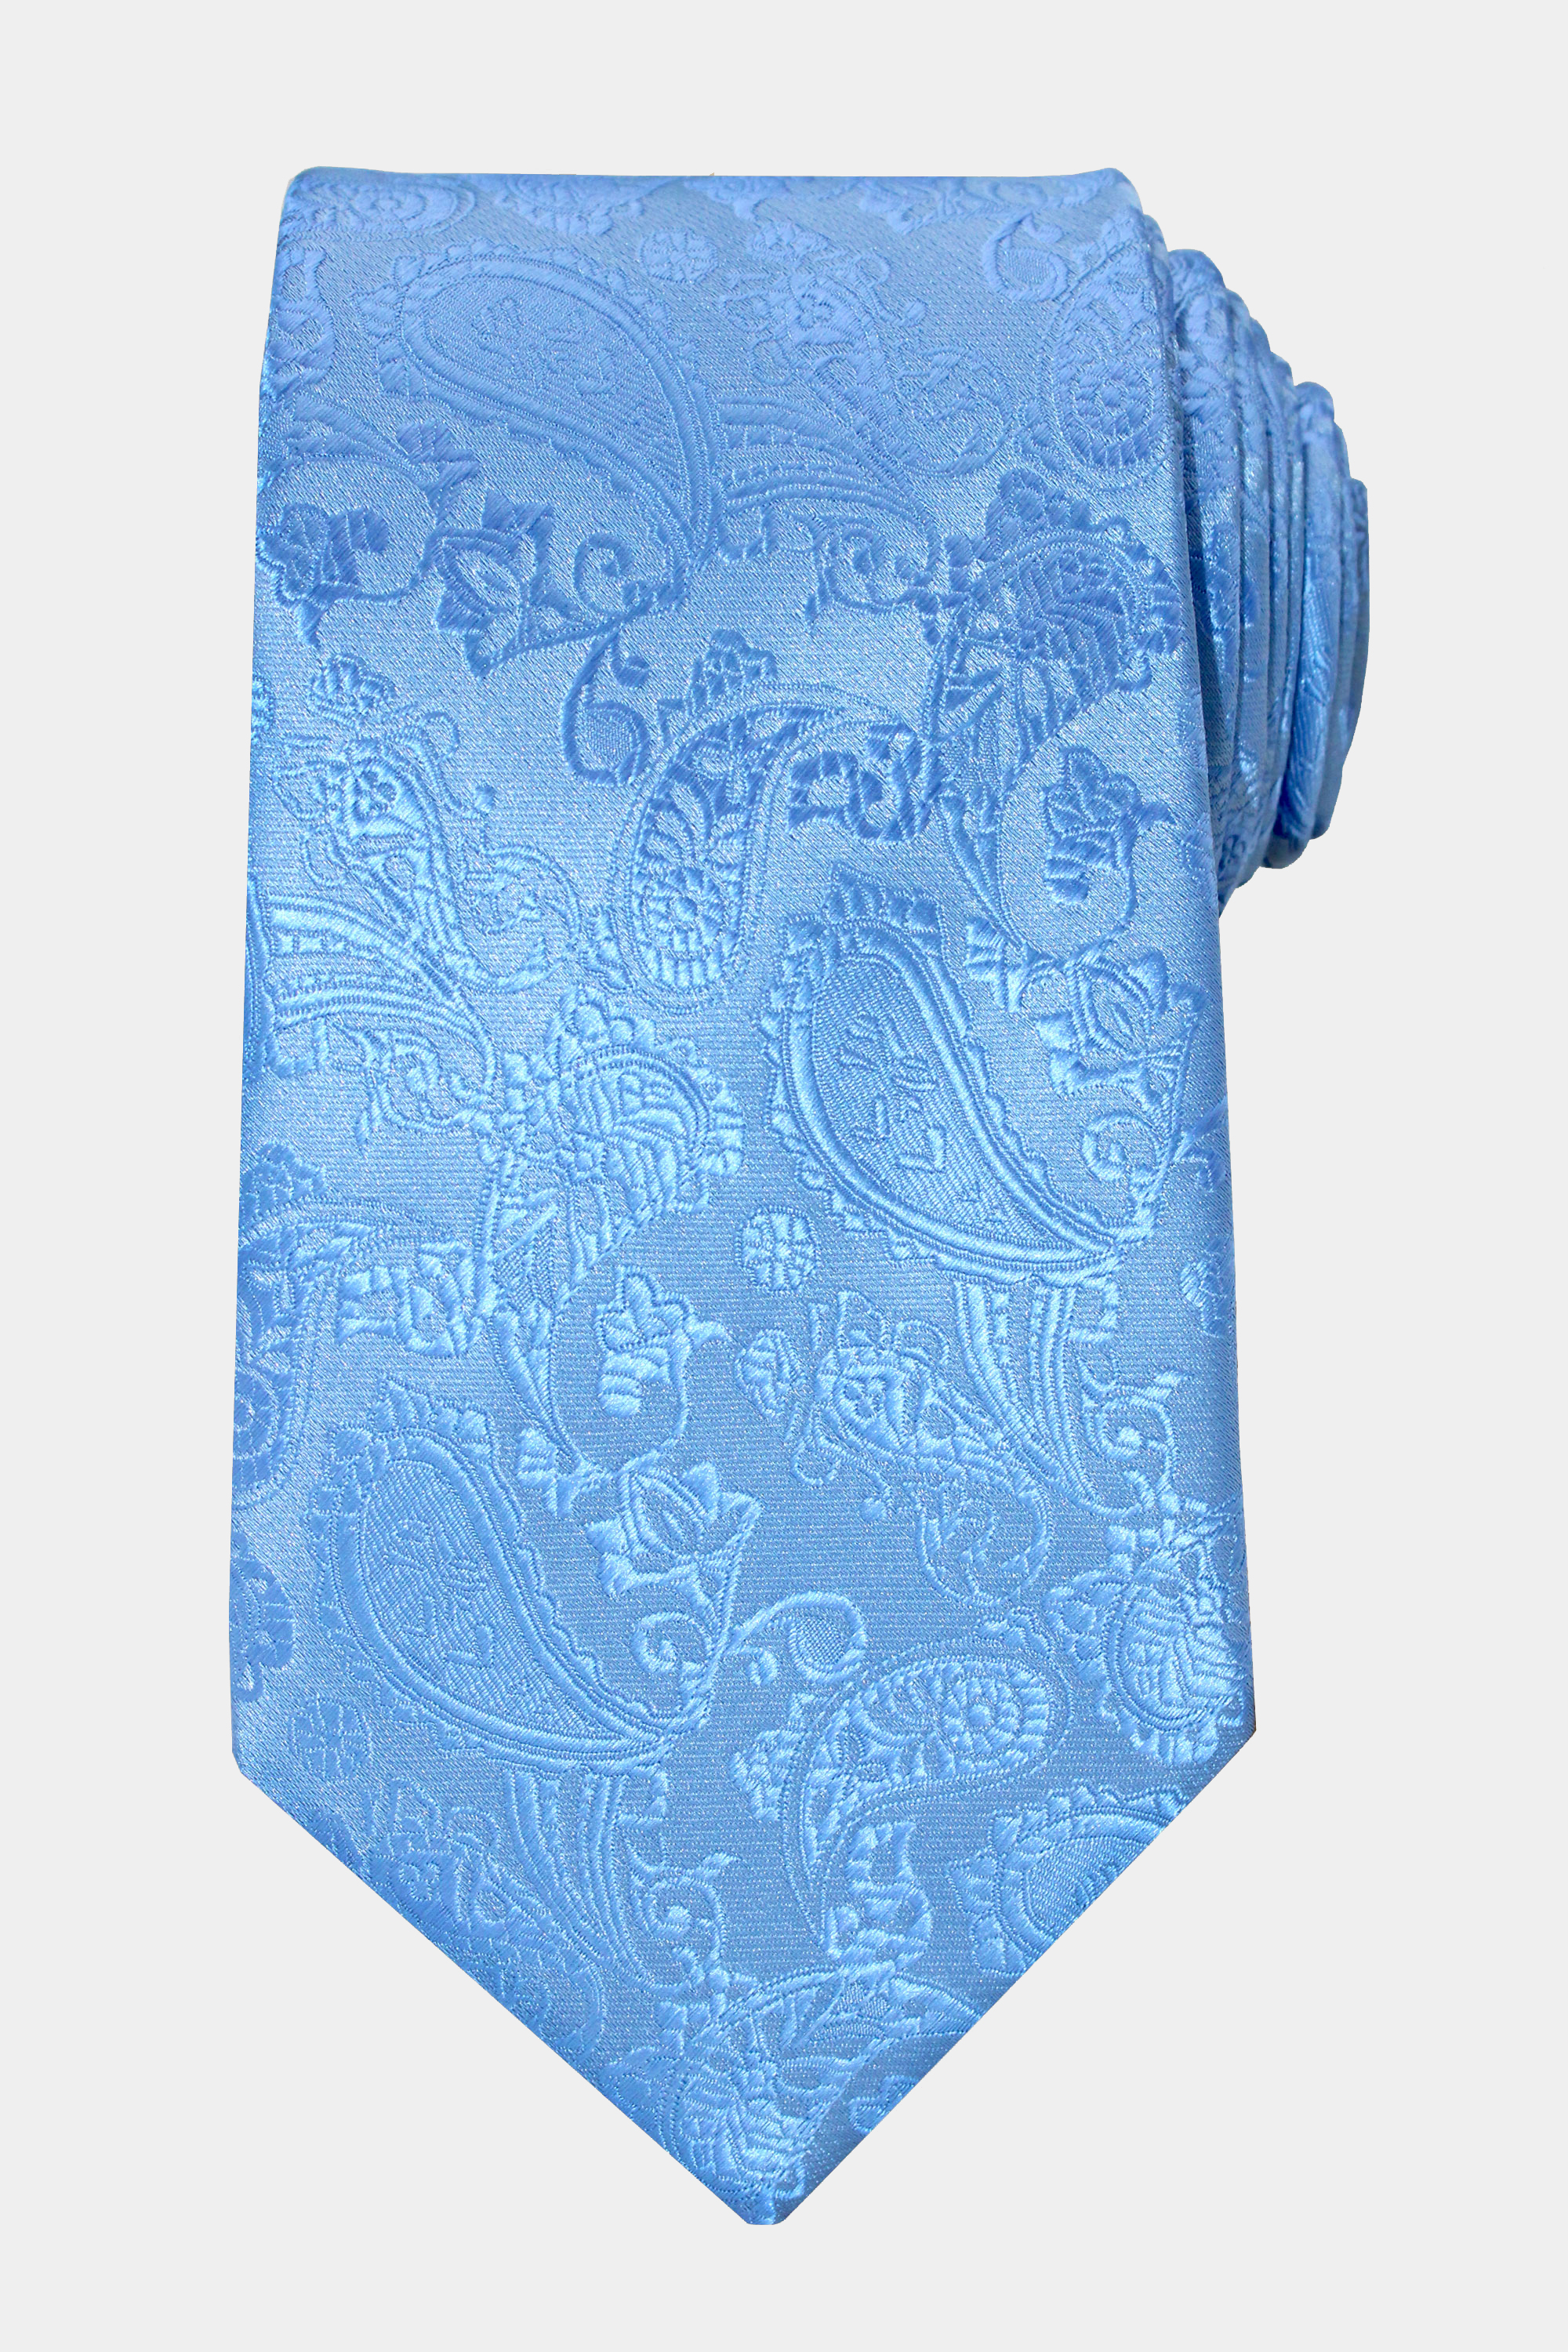 Light-Blue-Paisley-Tie-from-Gentlemansguru.com_